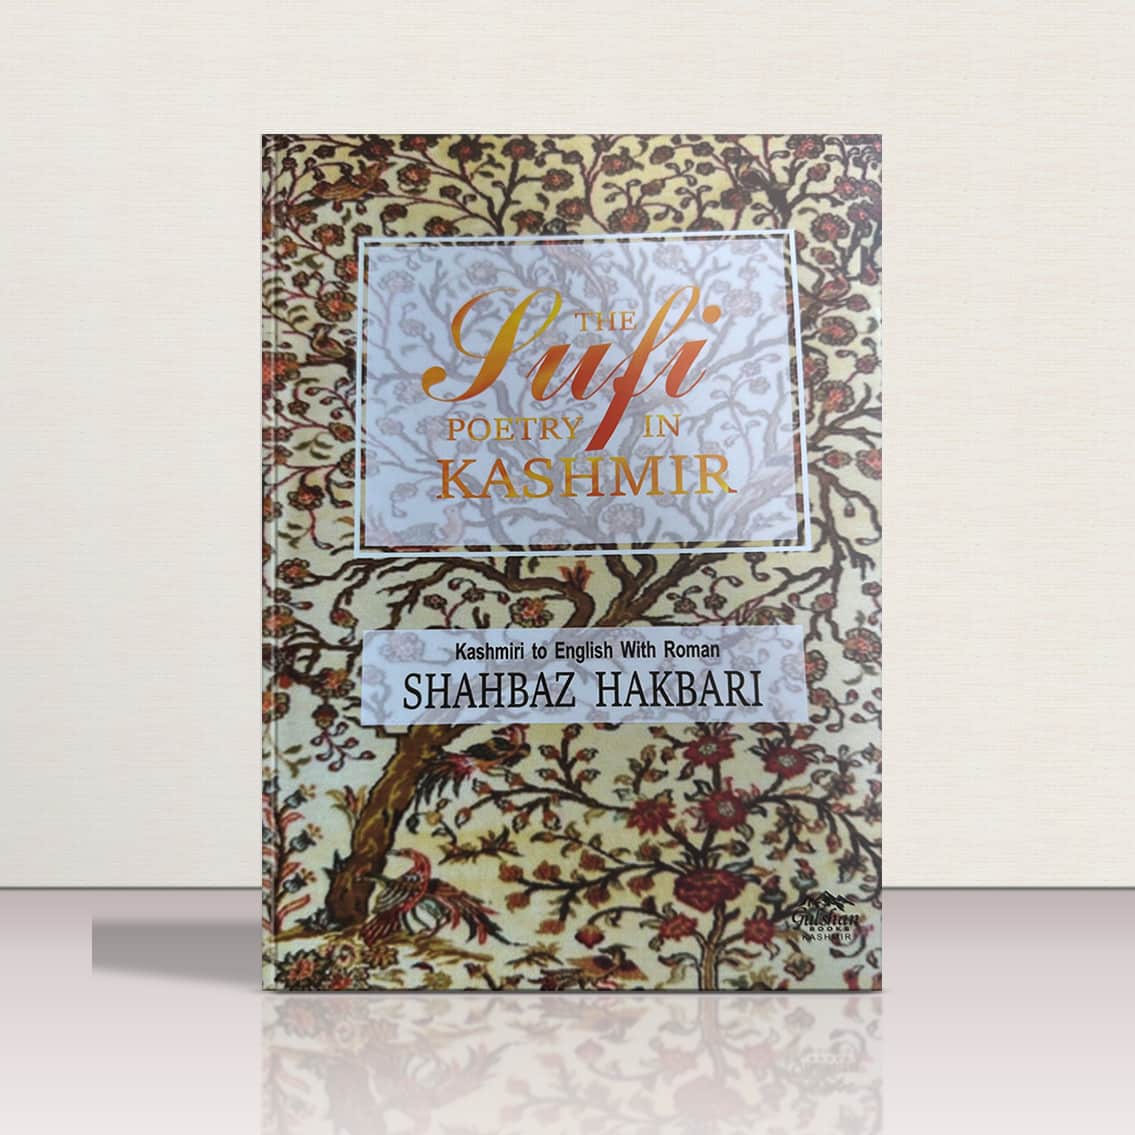 The Sufi poetry in Kashmir by Shahbaz Hakbari